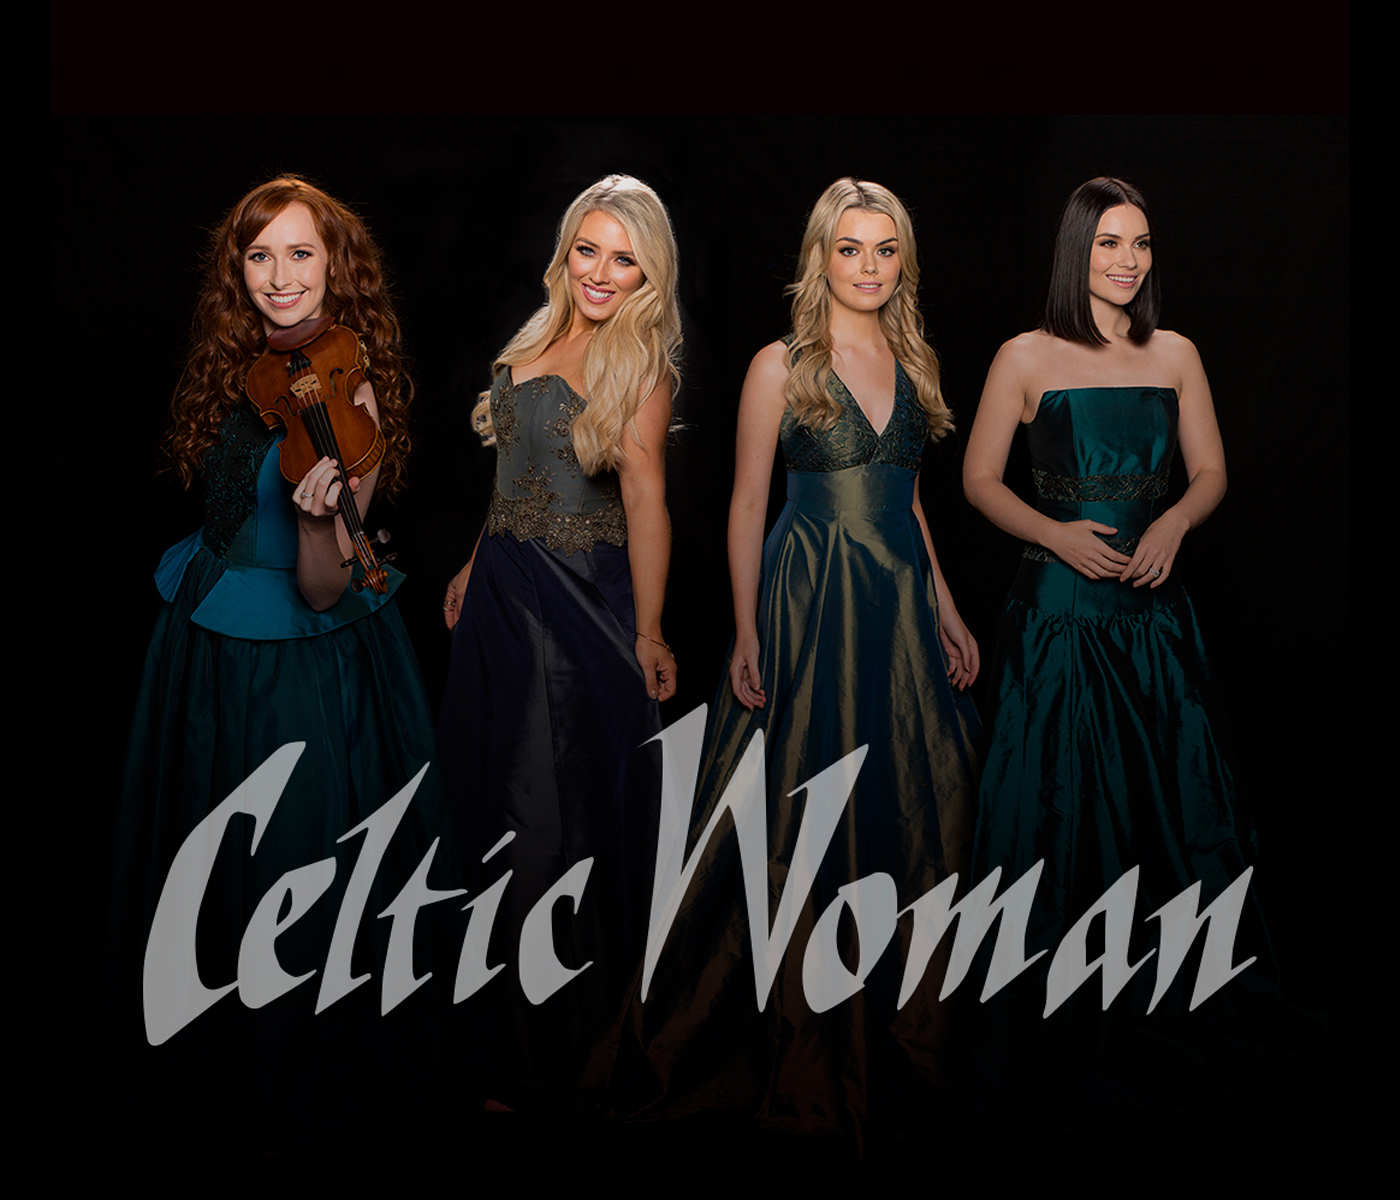 Designedly Website CelticWoman Homepage